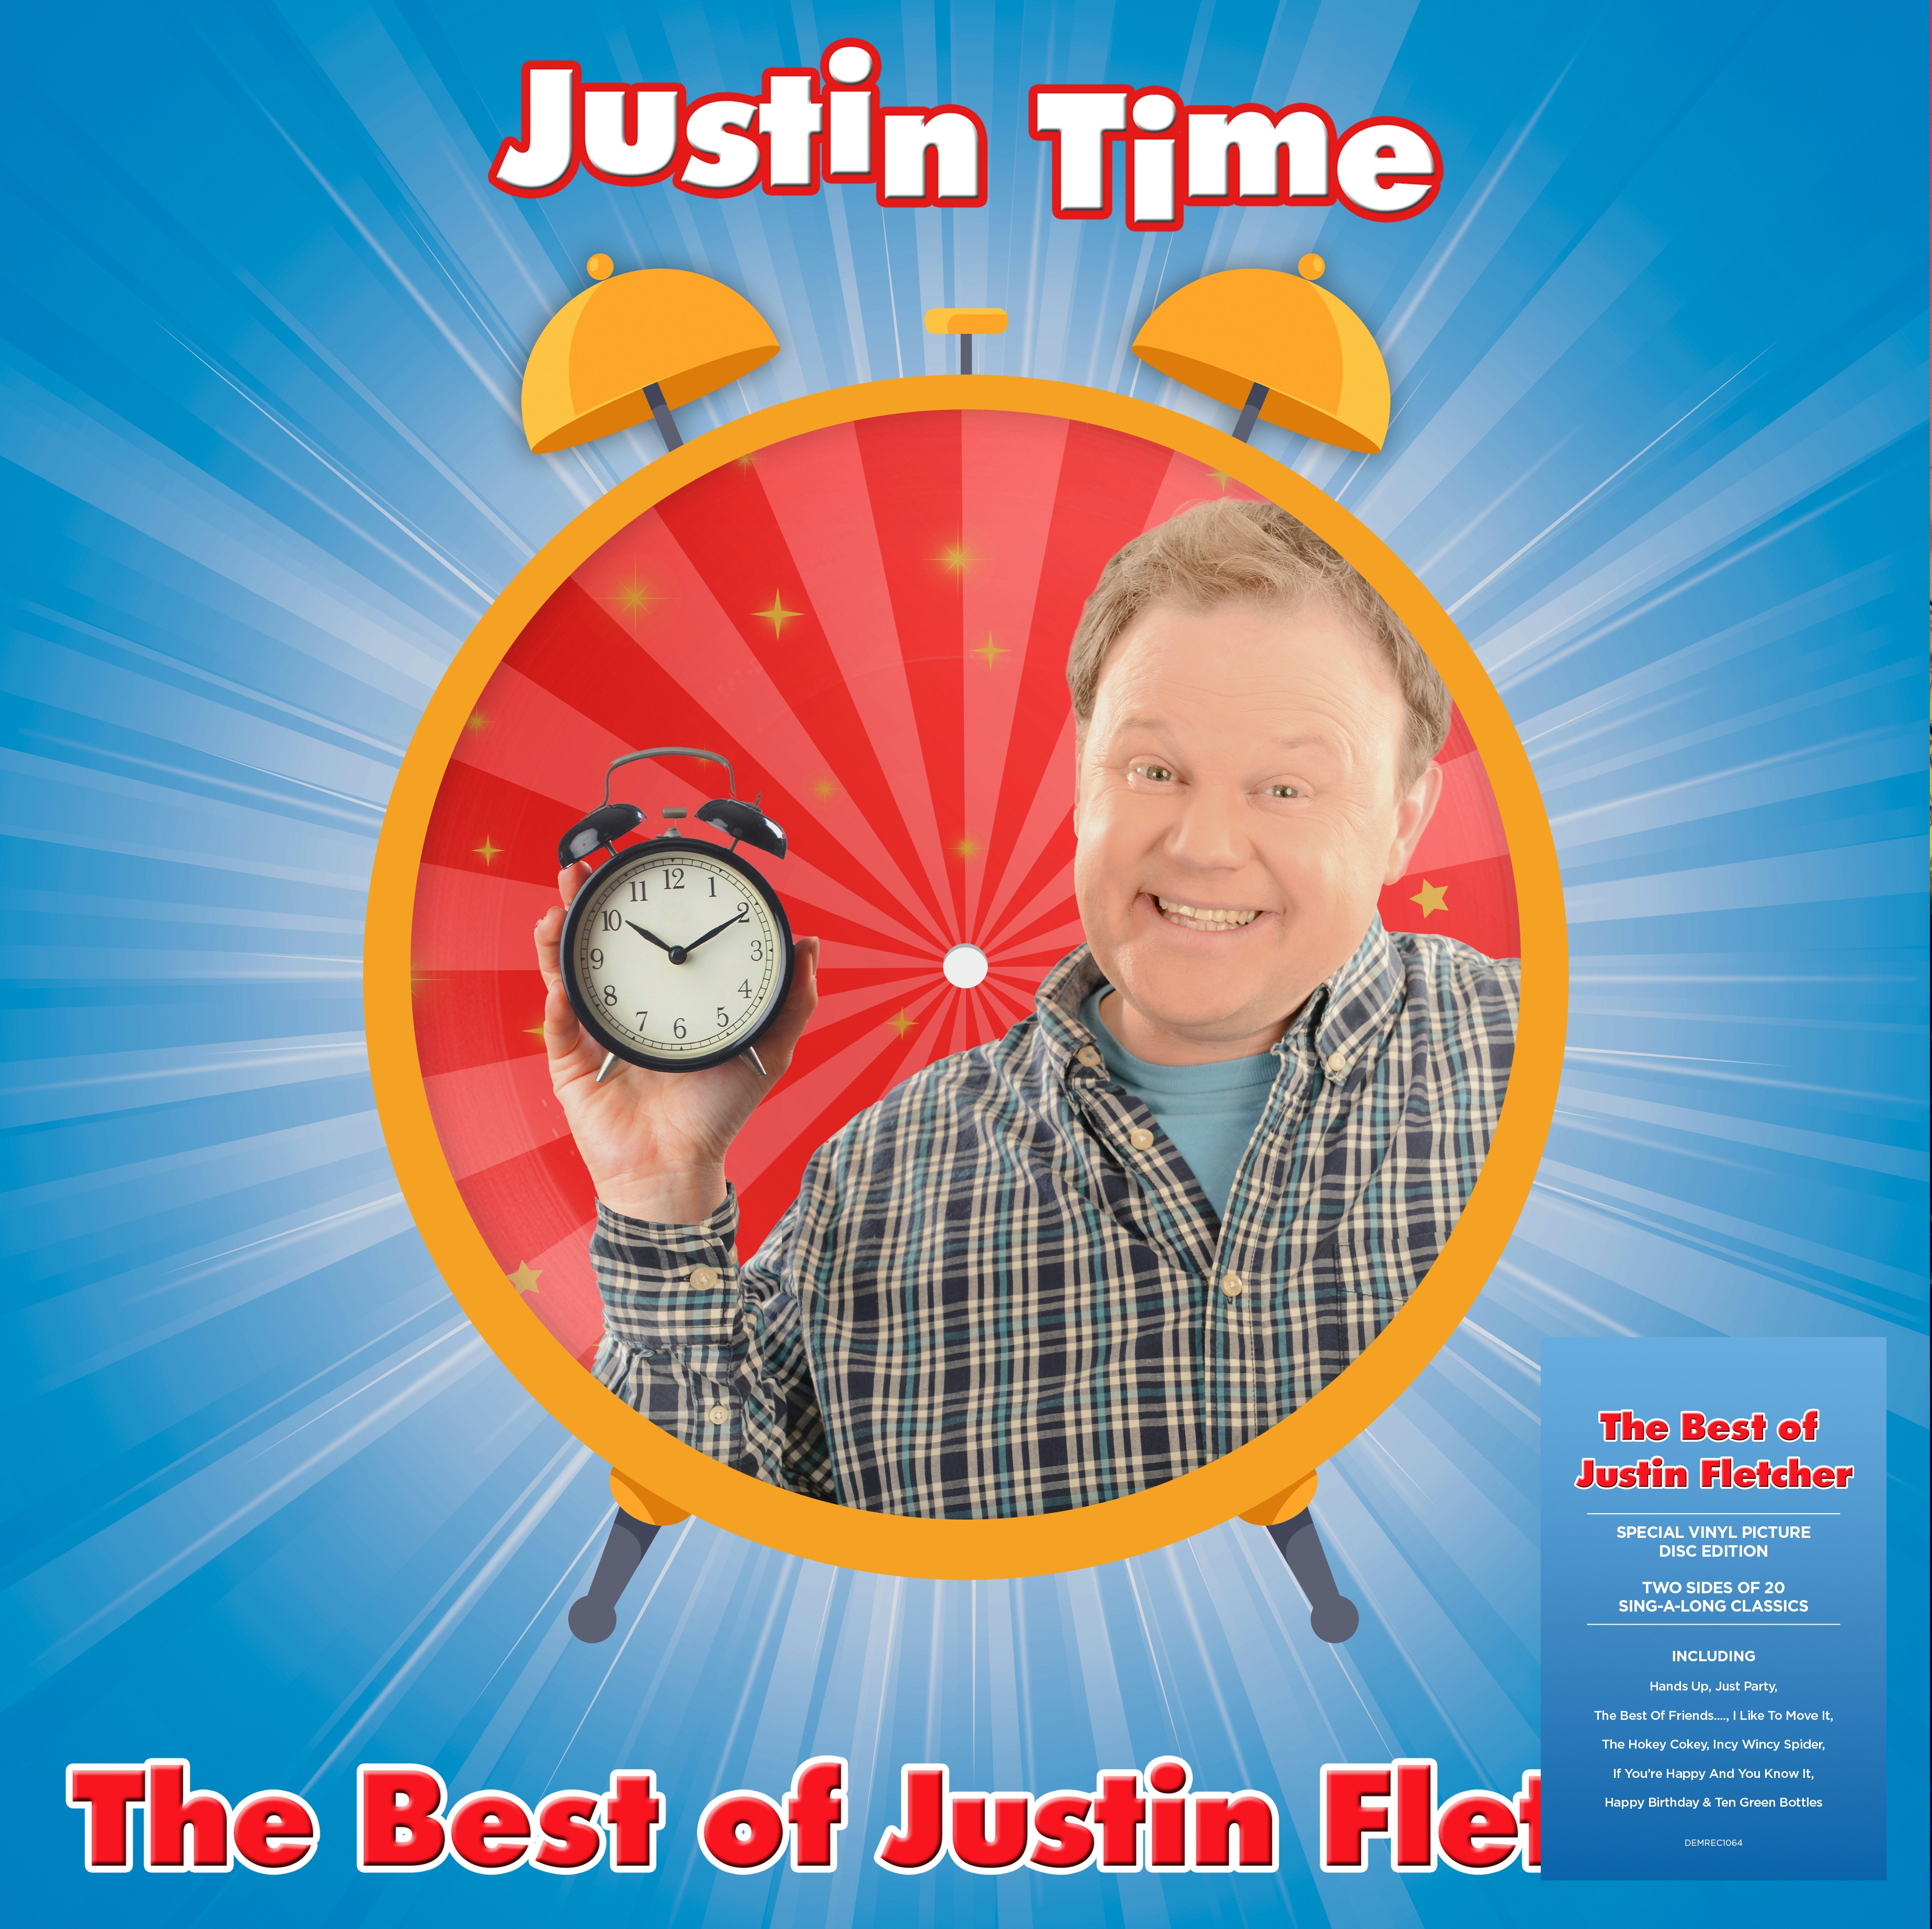 Album artwork for Justin Time - The Best of Justin Fletcher by Justin Fletcher